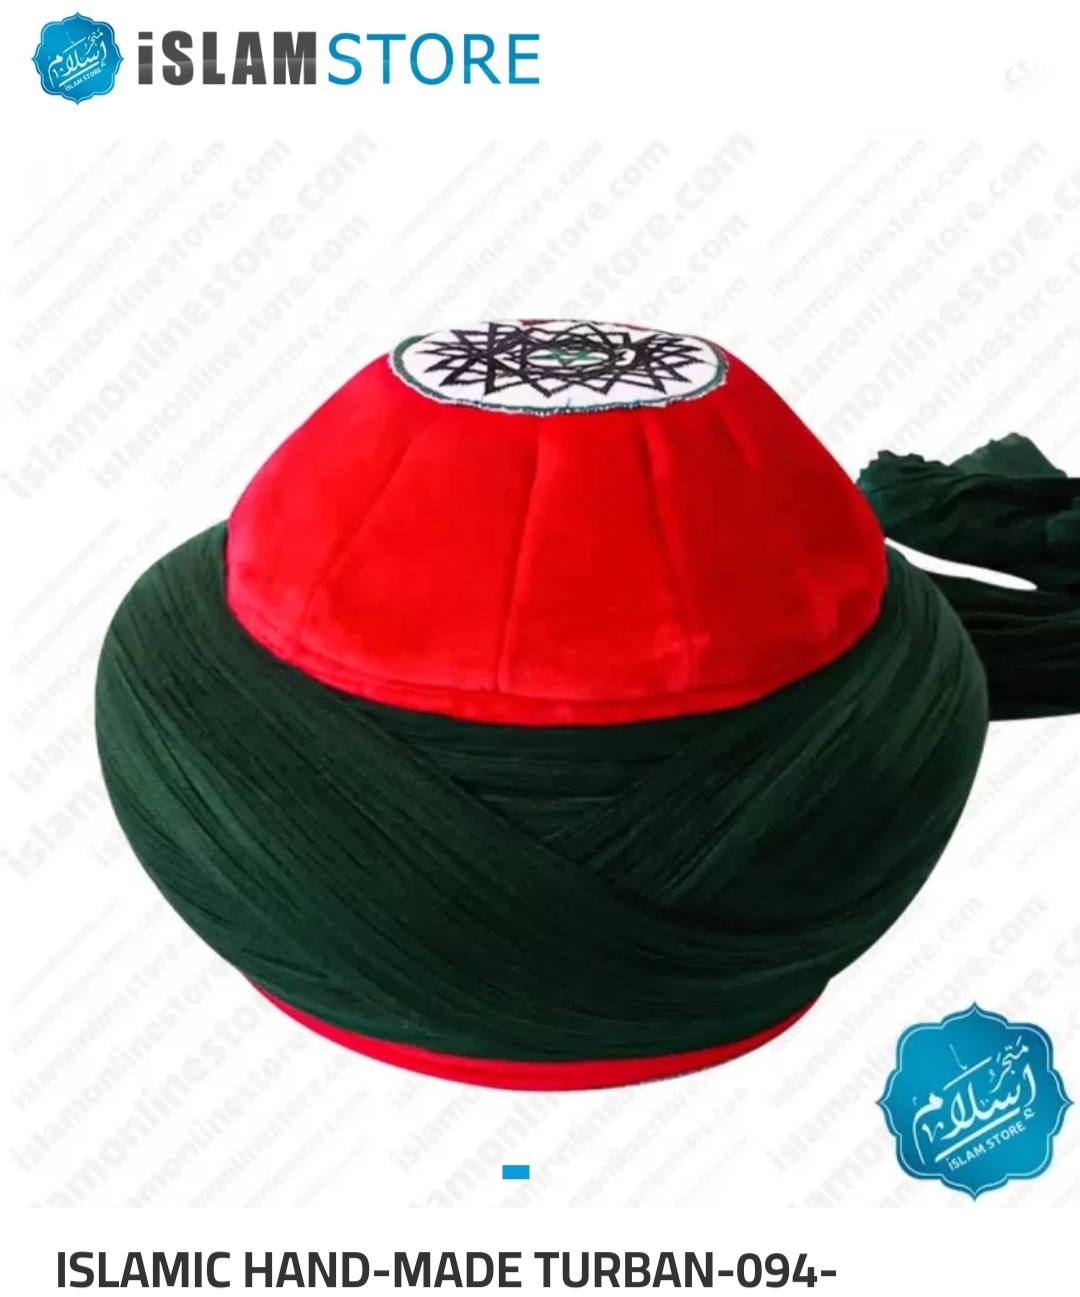 Islamic hand-made turban-094